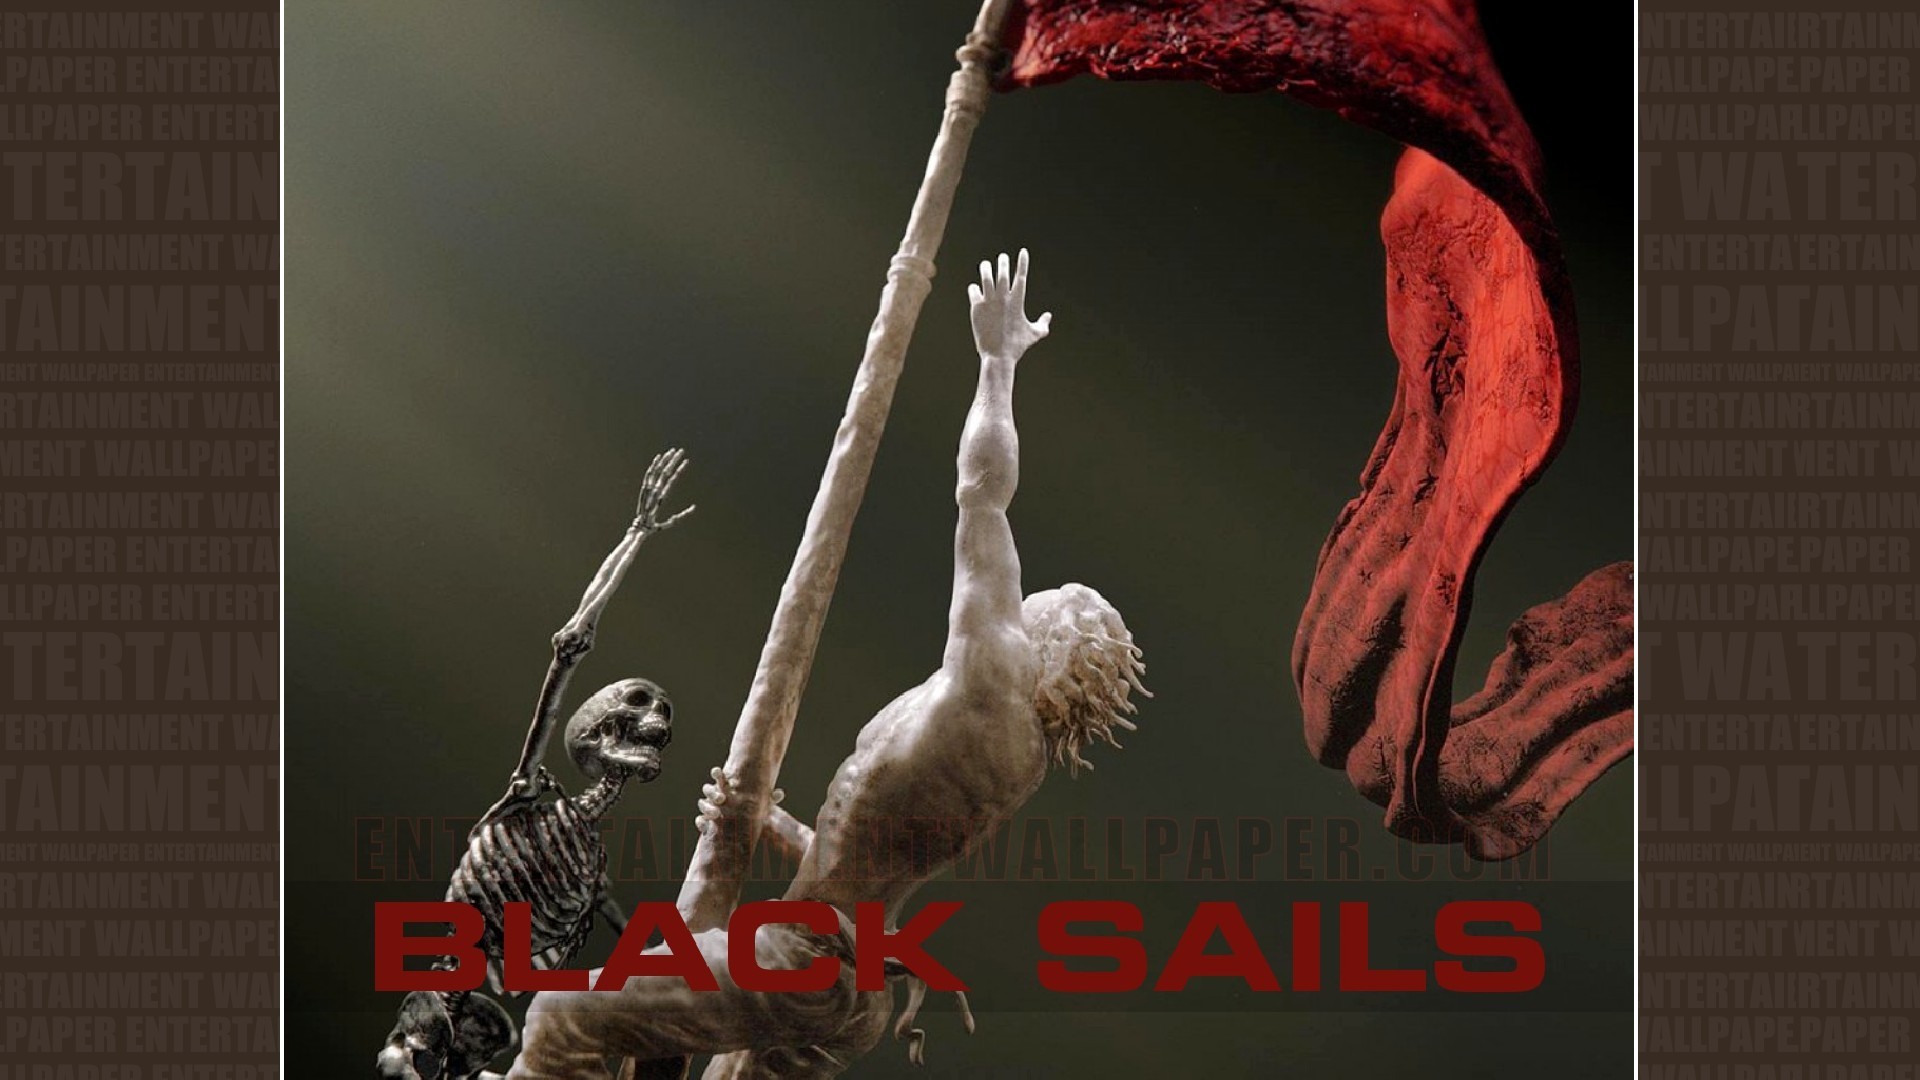 Black Sails Wallpaper – Original size, download now